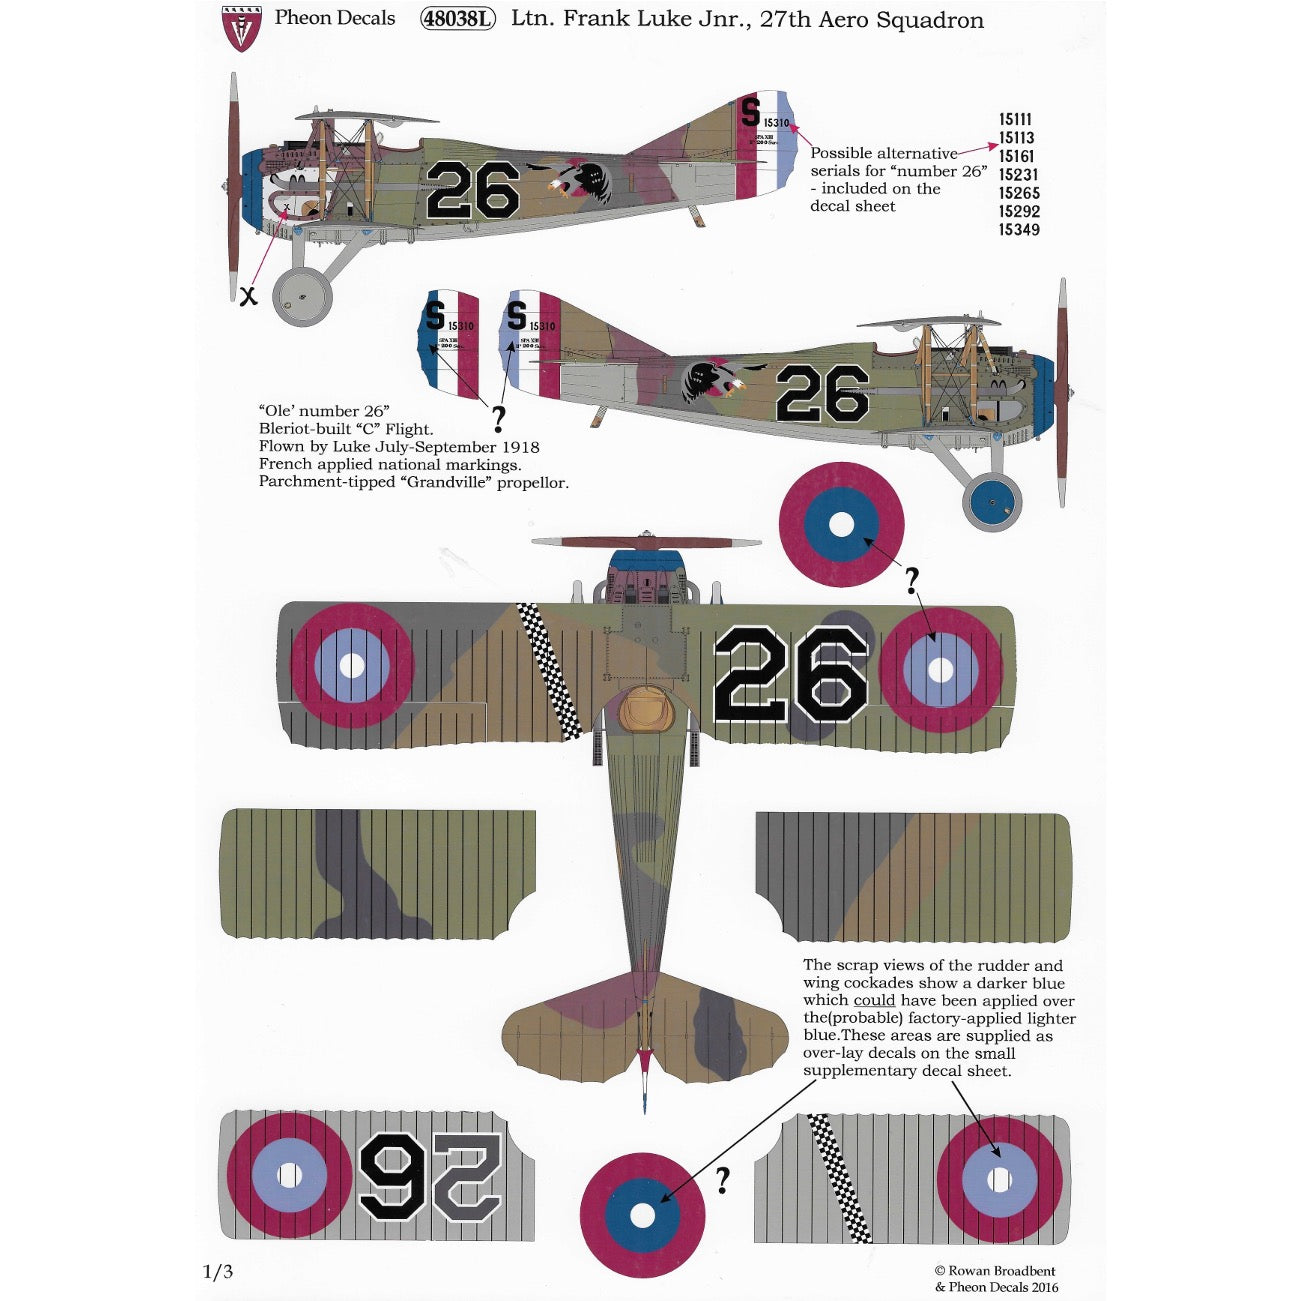 1/48 - Frank Luke Jr. 27th Aero Squadron - Limited Edition